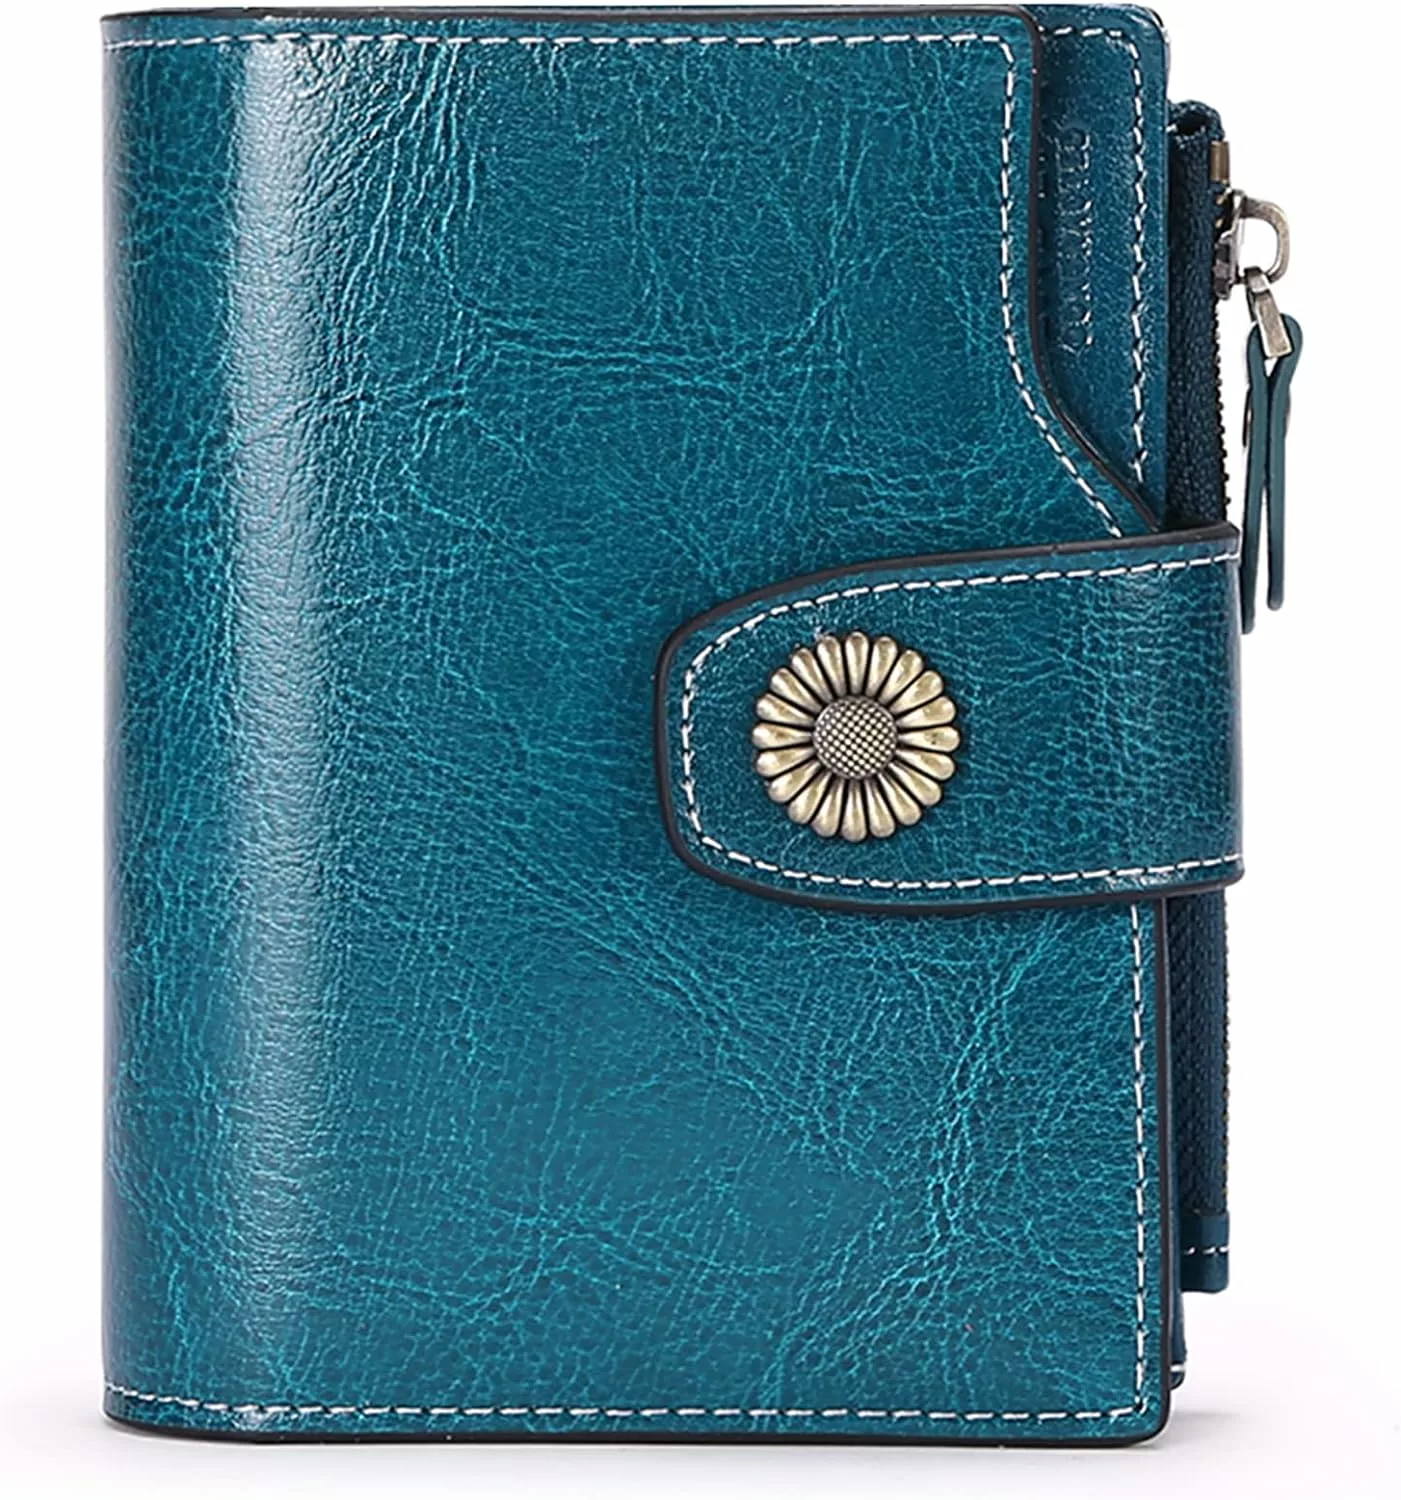 SENDEFN Small Women Wallet Genuine Leather RFID Blocking Bifold Small Purse with Zipper Pocket